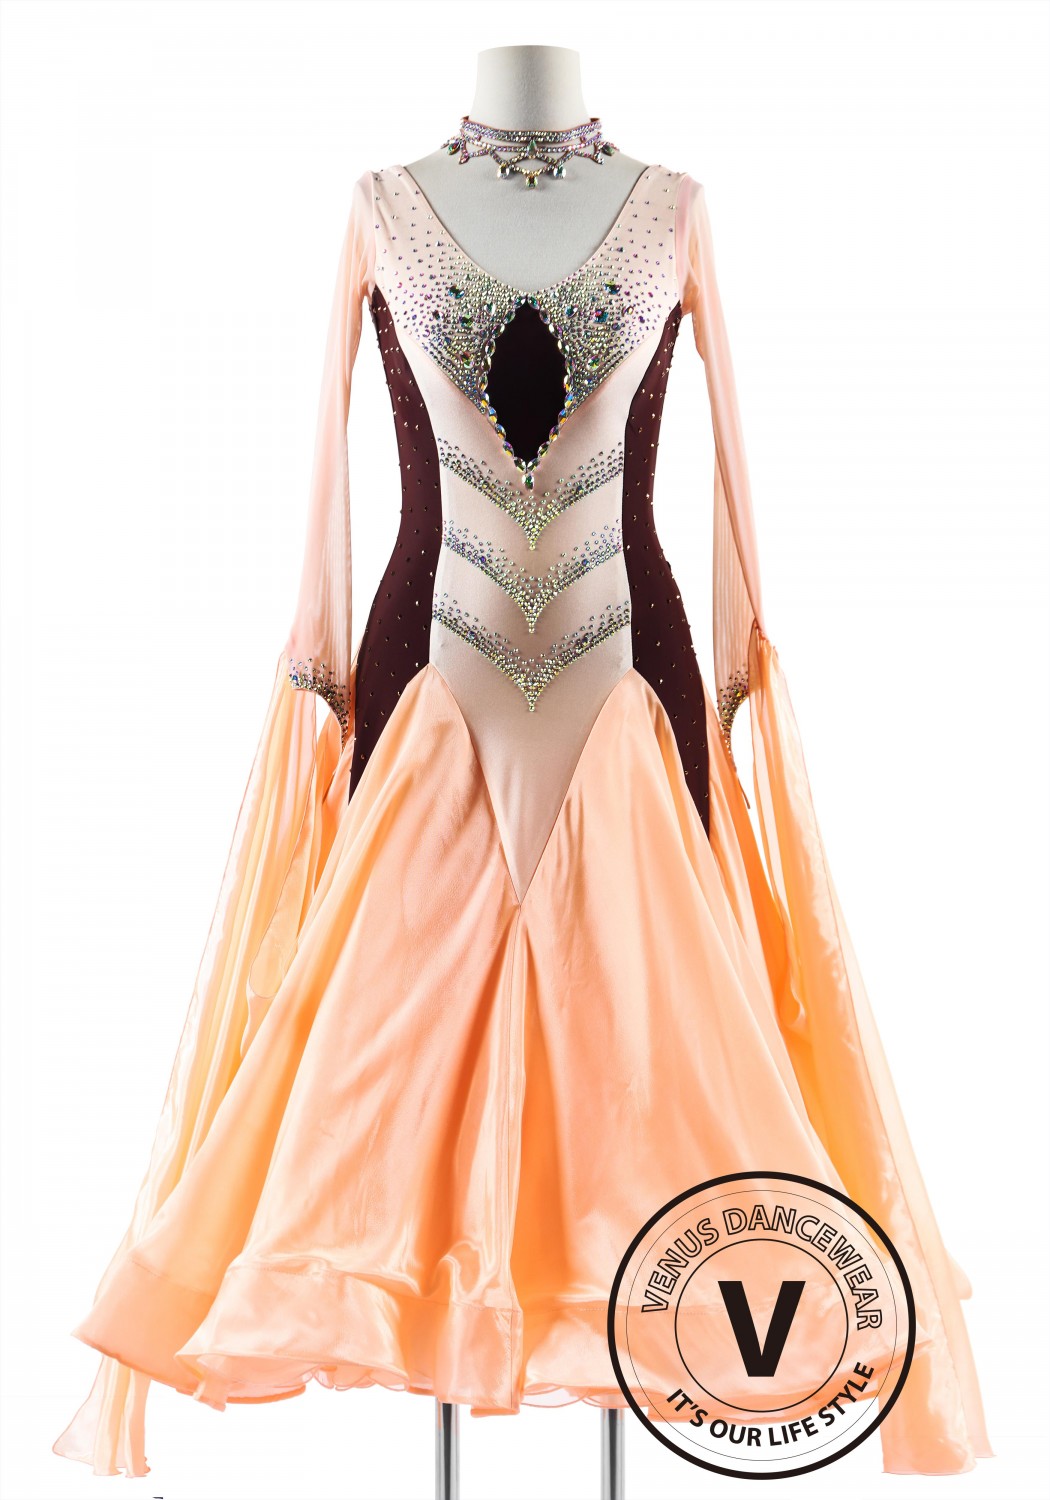 Peach Truffle dress with Pearl Silk Skirt Ballroom Smooth Competition Dance Dress